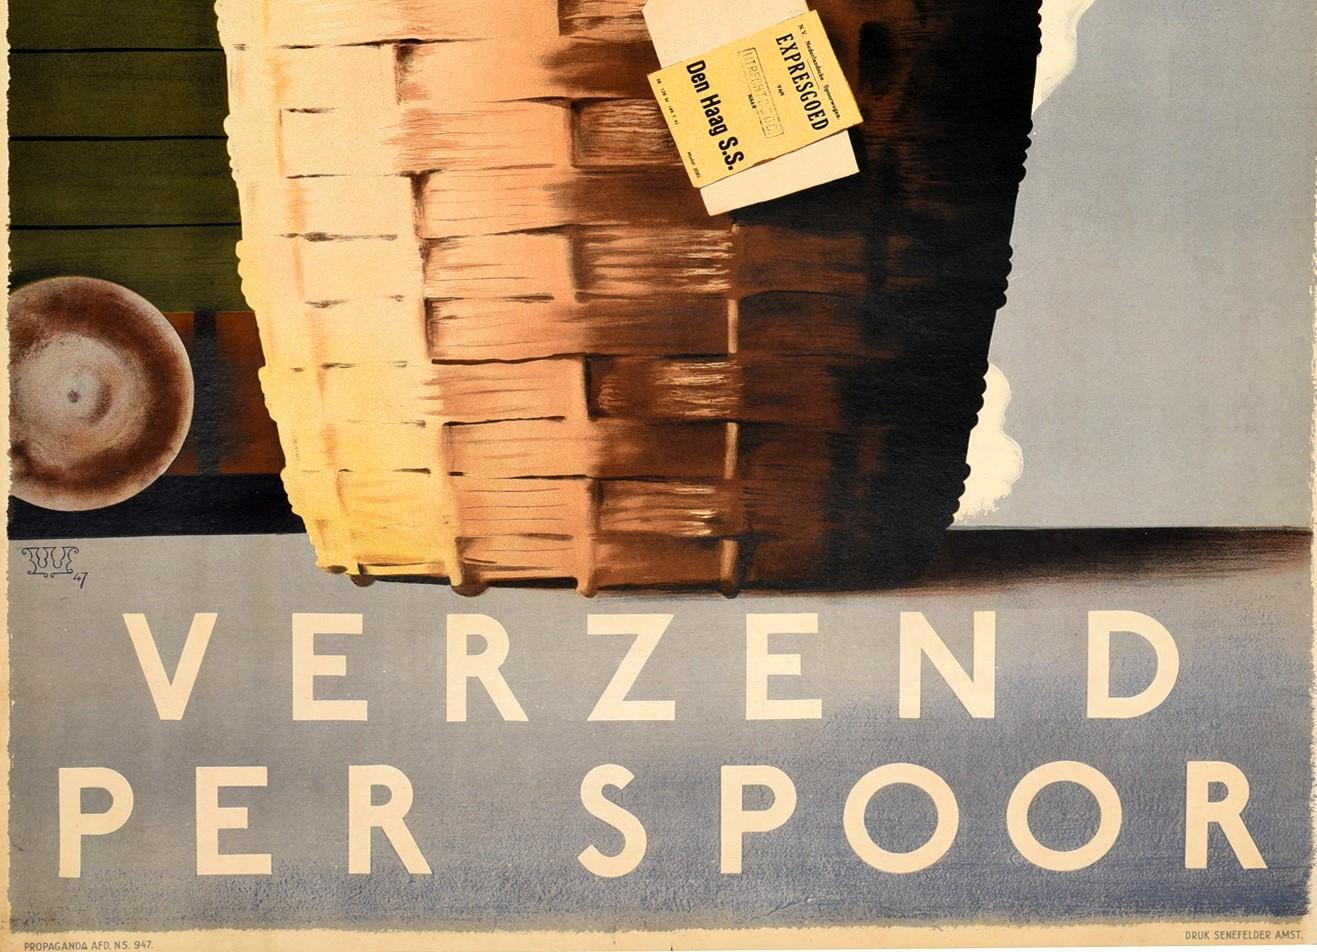 Dutch Original Vintage Poster Verzend Per Spoor Express Goods By Rail Wine Den Haag For Sale